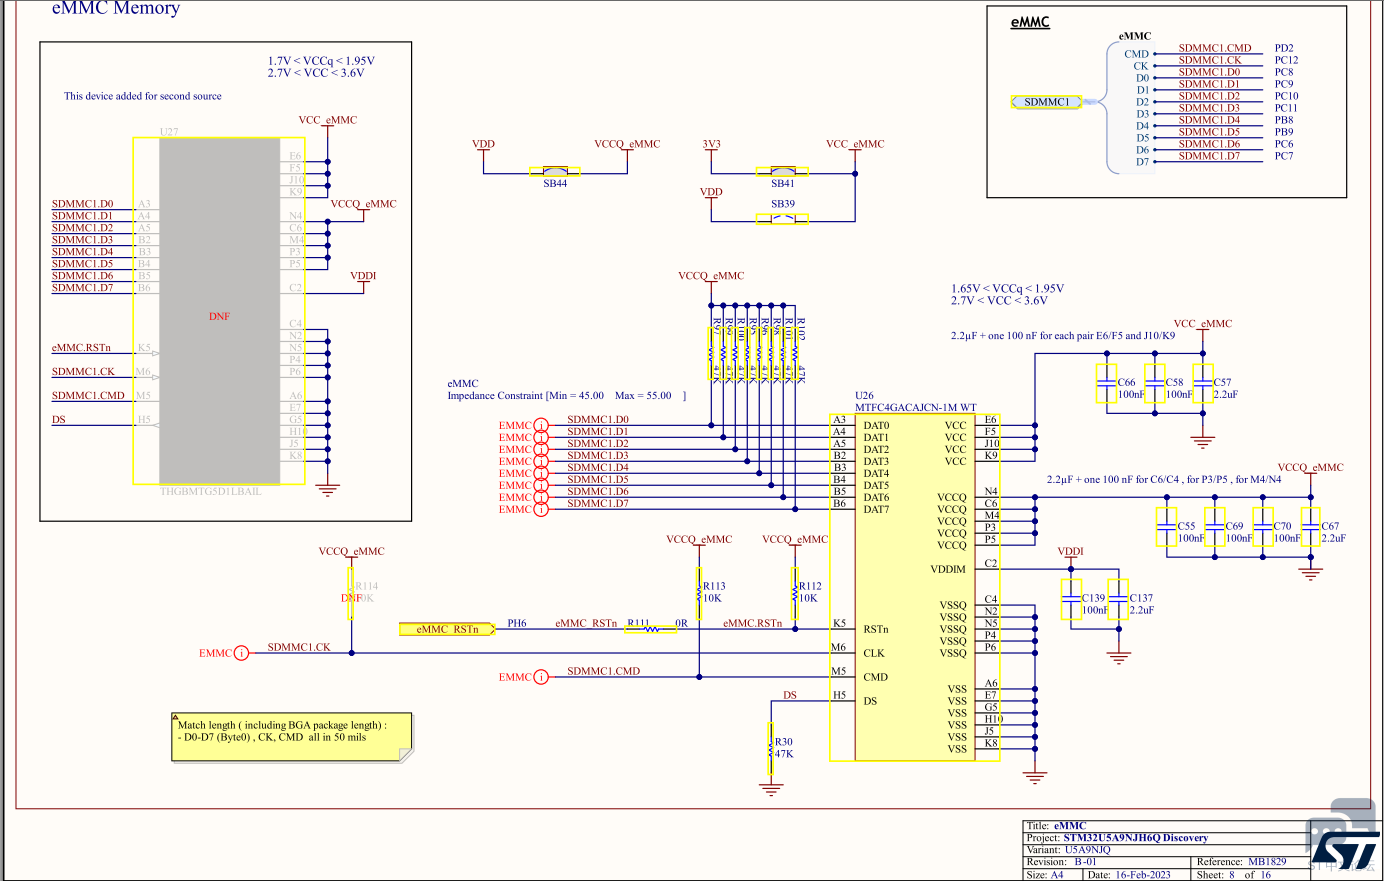 Stm32u5A9 emmc schematic.PNG